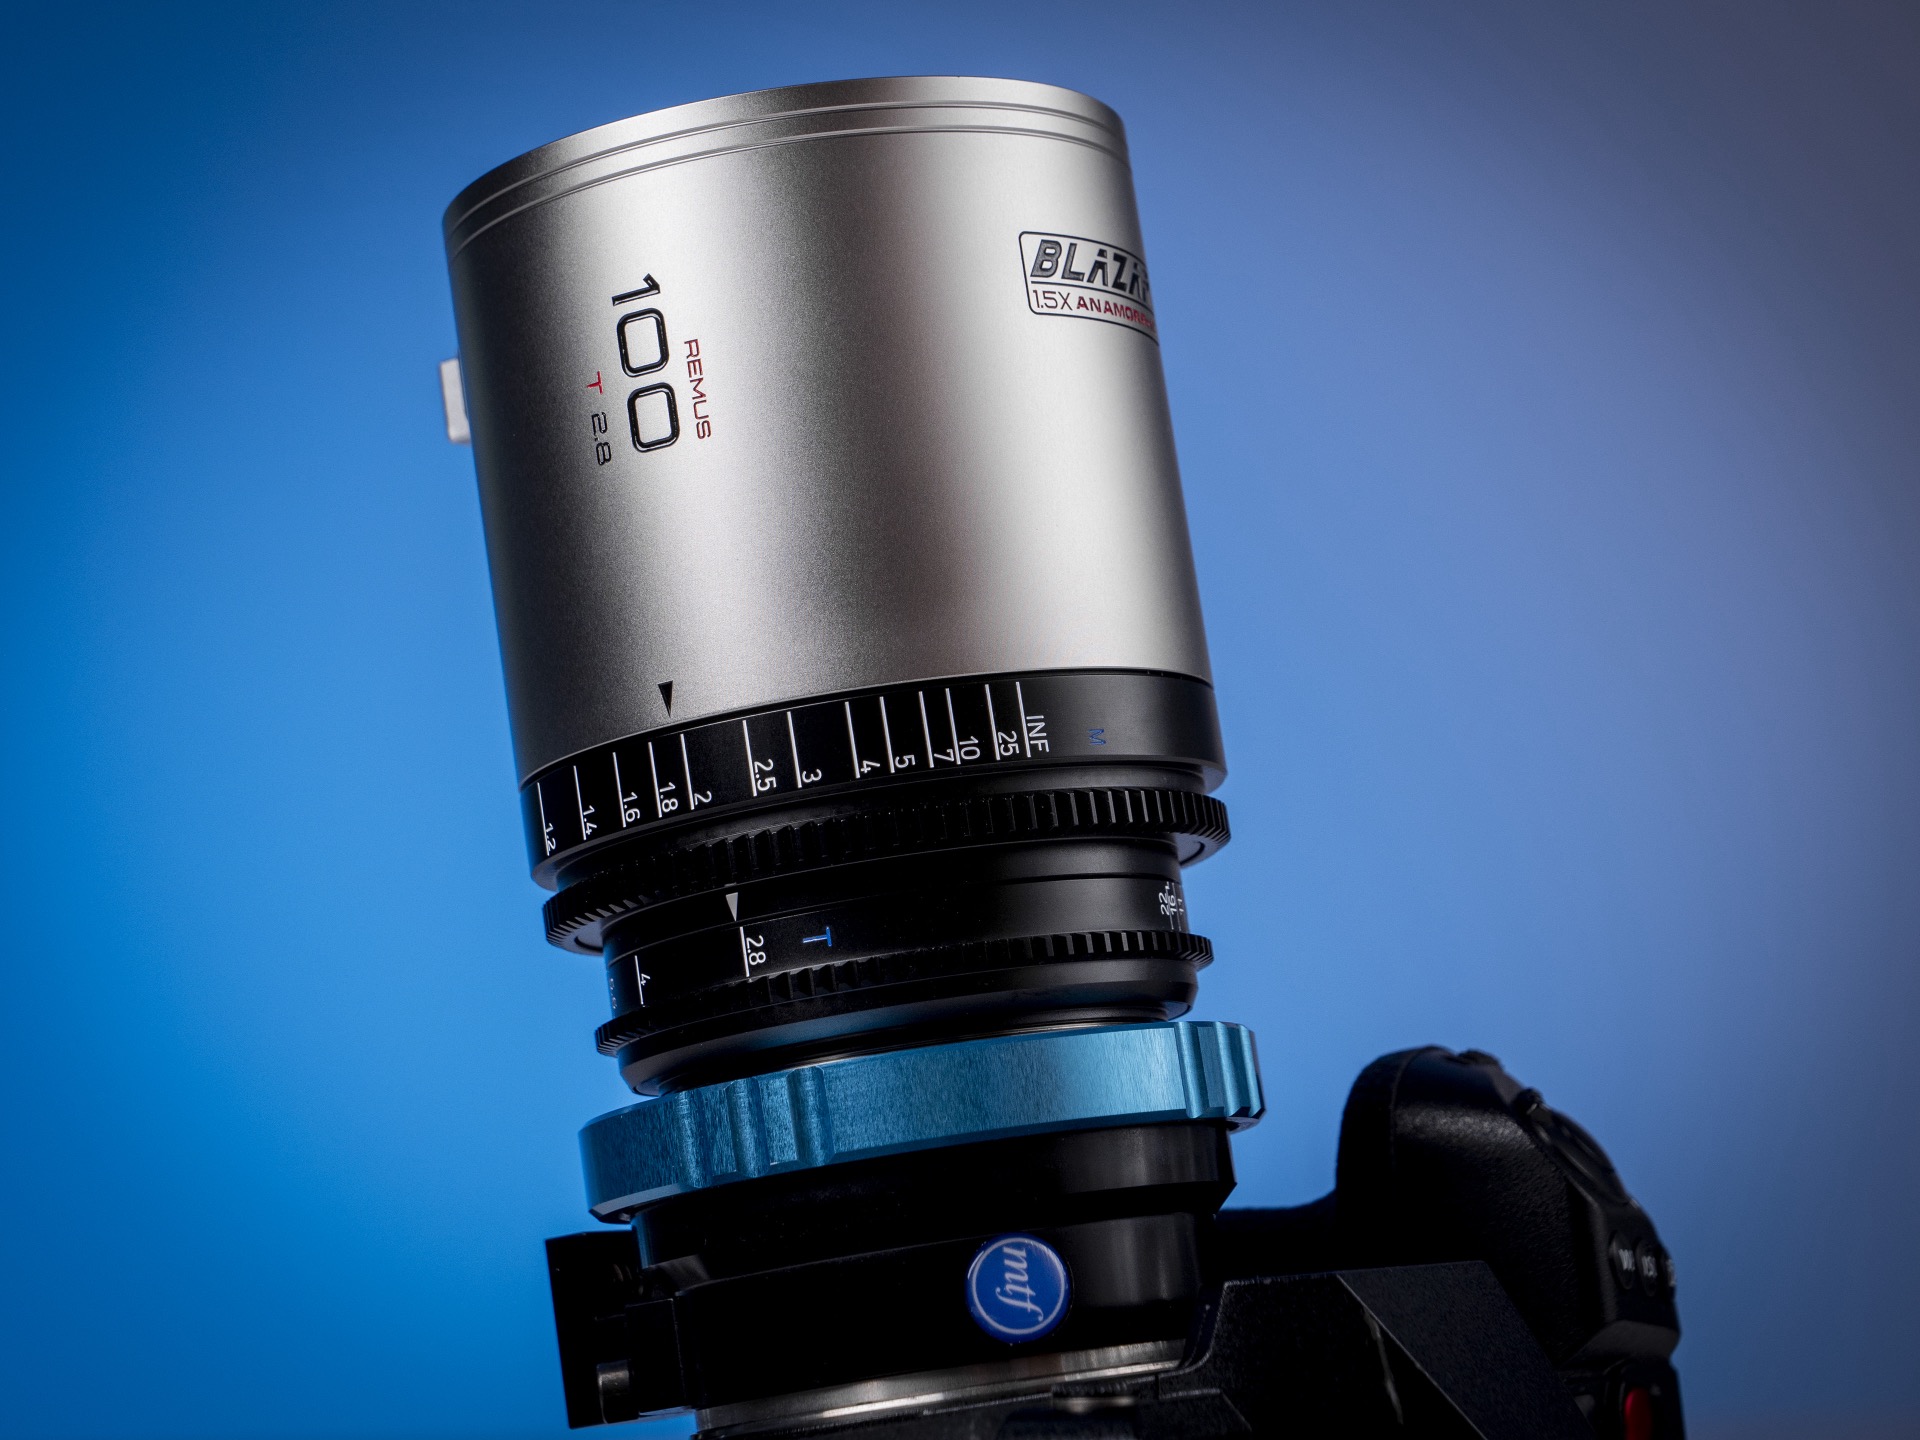 Review: Blazar Remus 1.5x anamorphic lenses 20